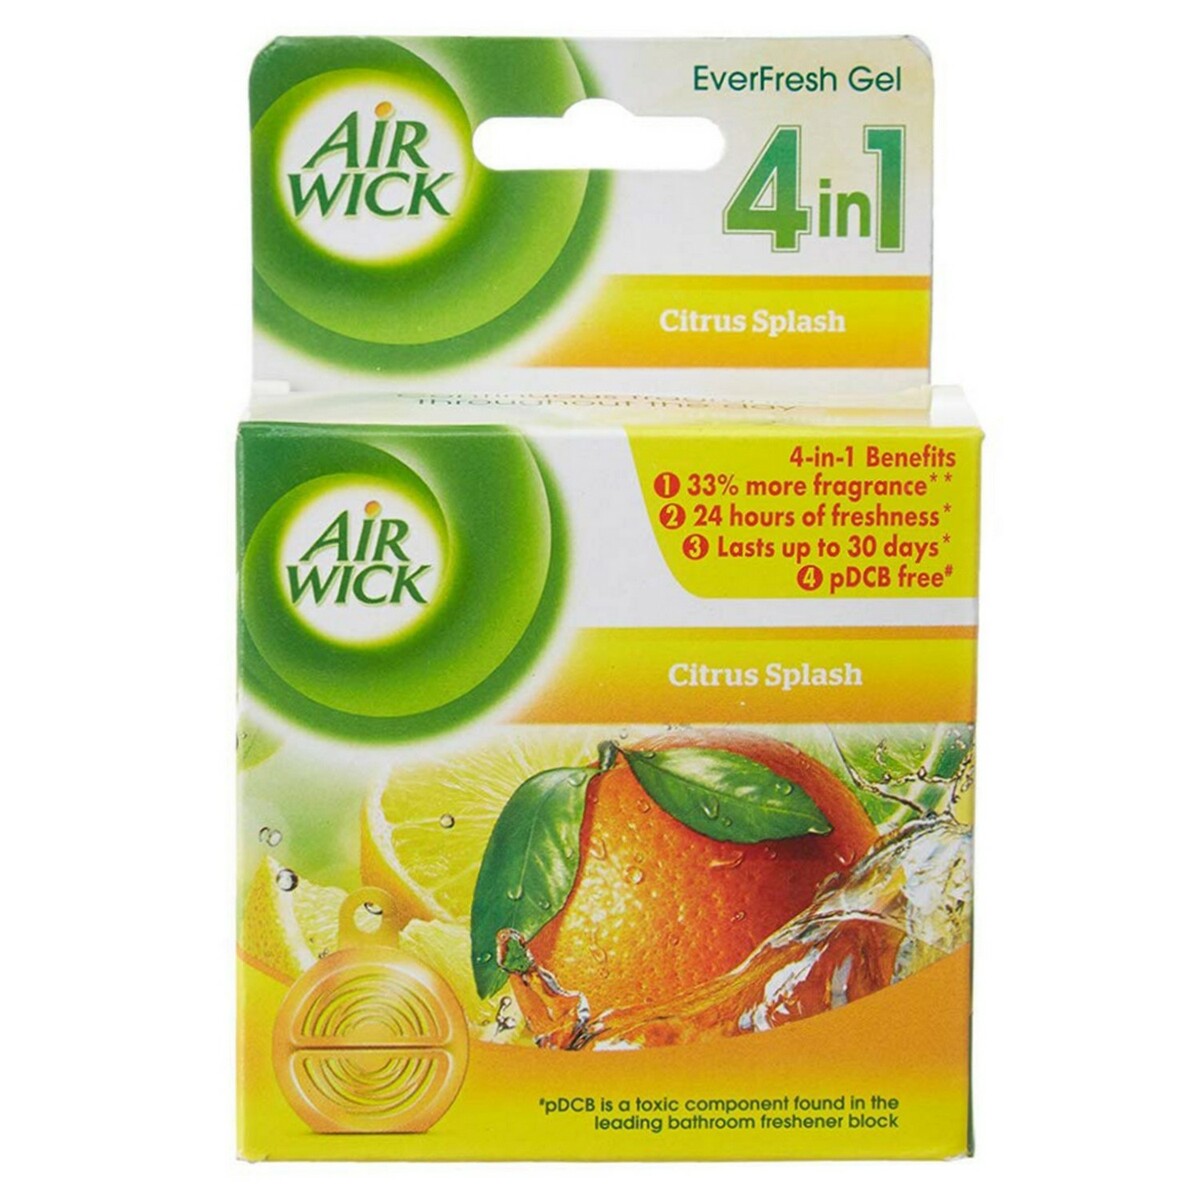 Air Wick Everfreshgel Citrus Splash 50g